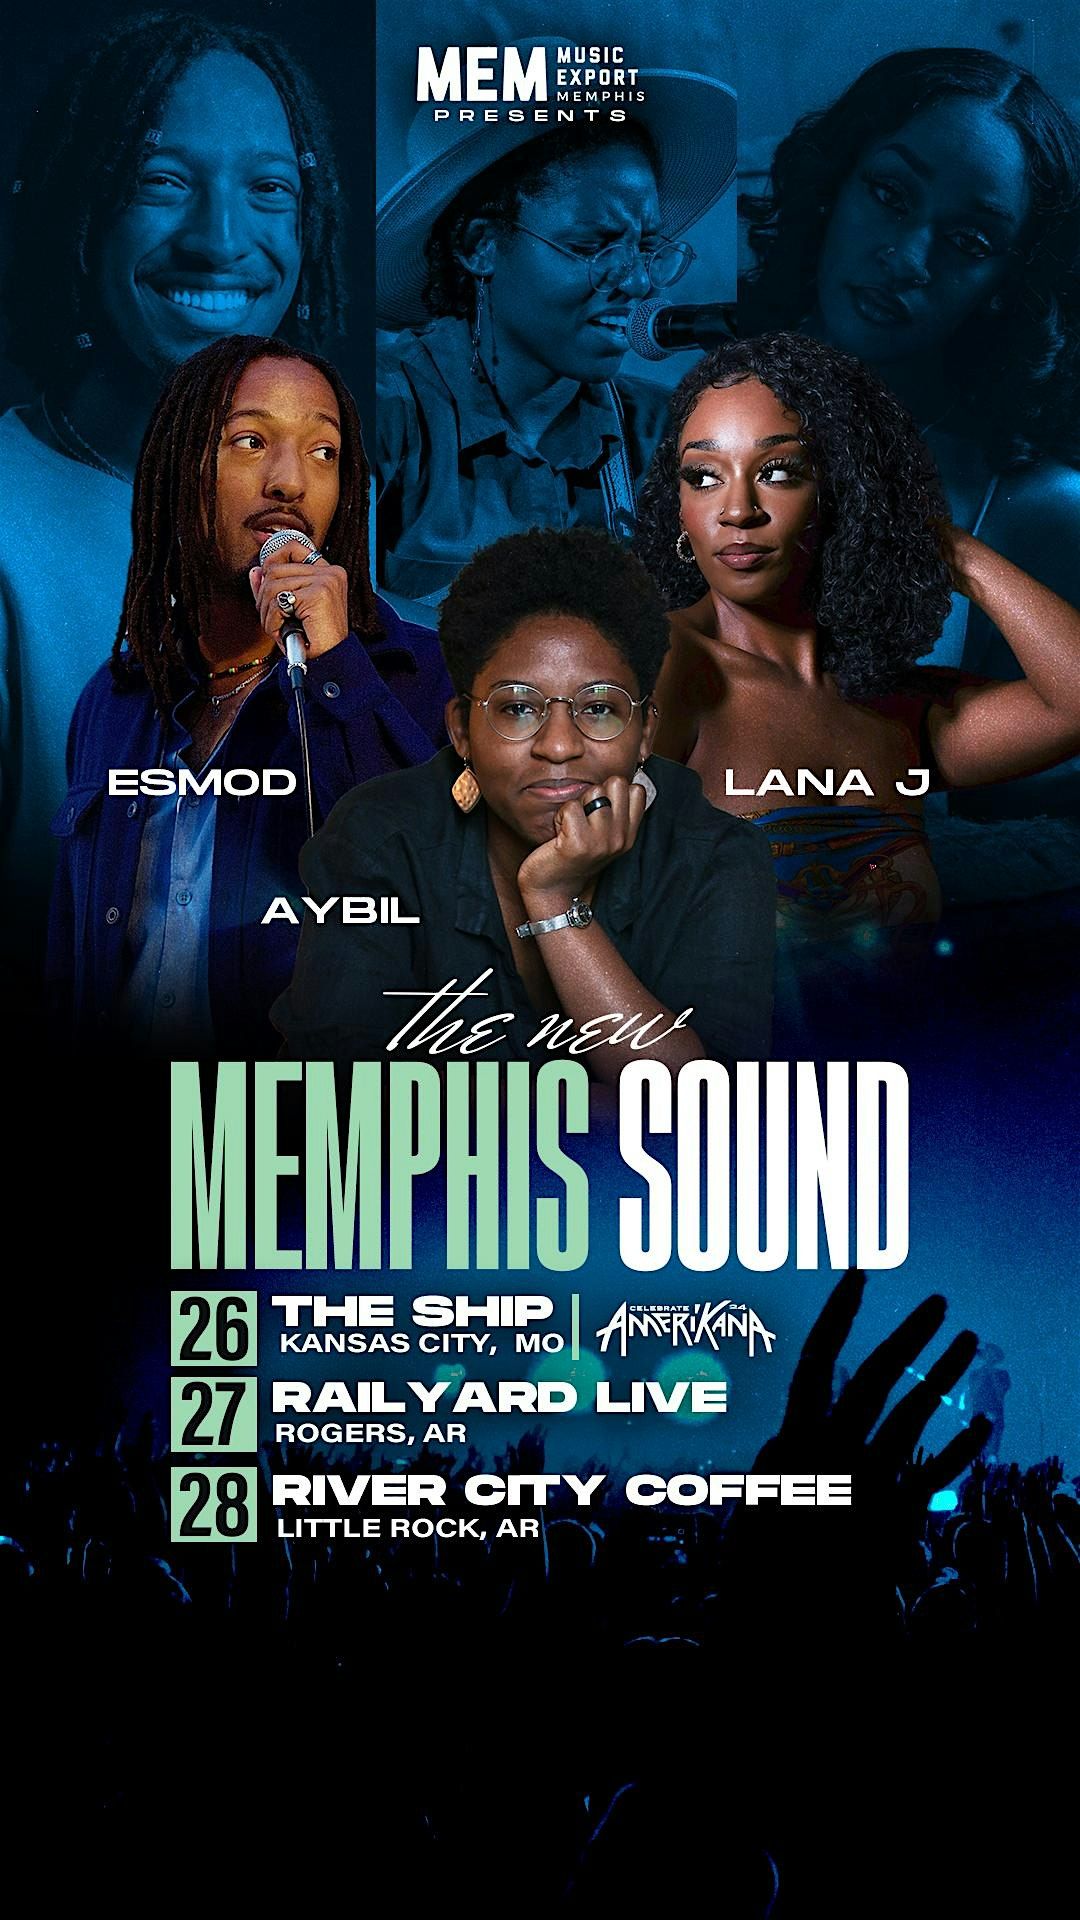 Celebrate AMERI\u2019KANA presents the New Memphis Sound